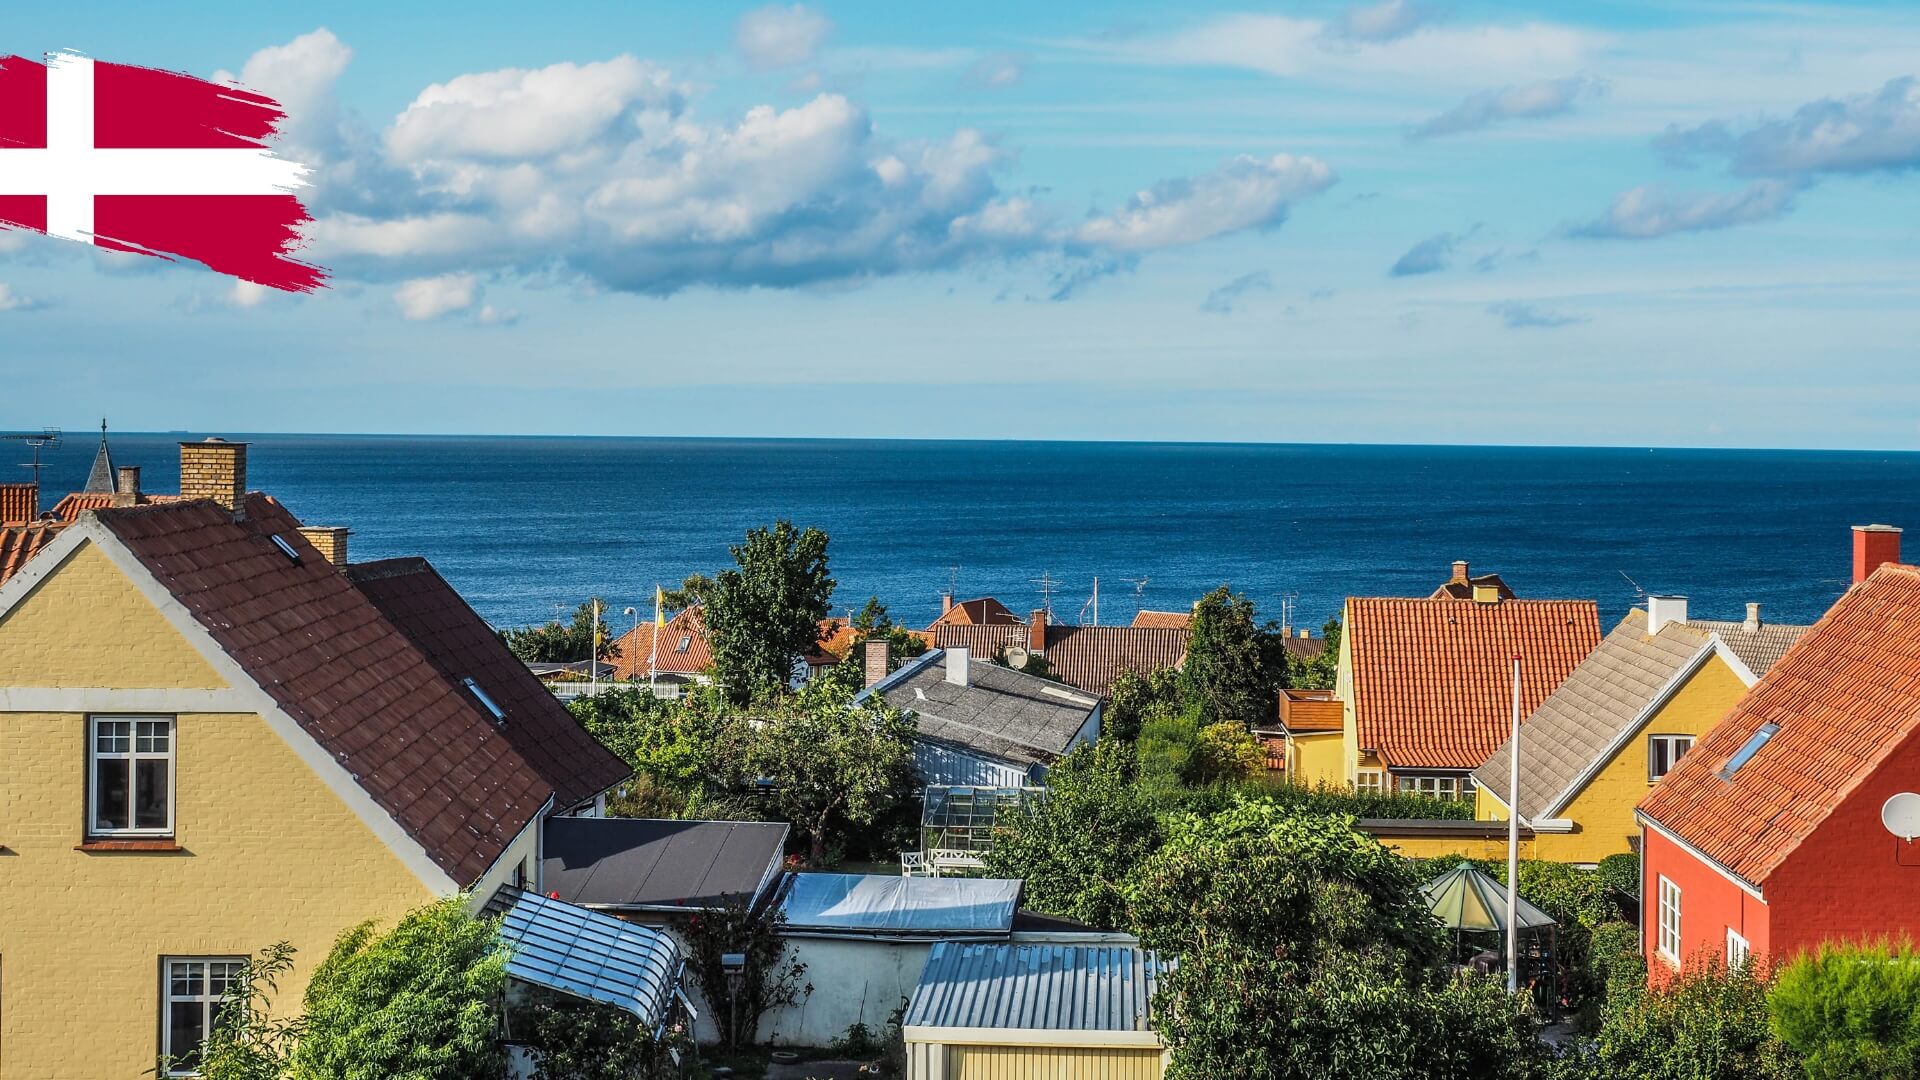 Danish coastal town